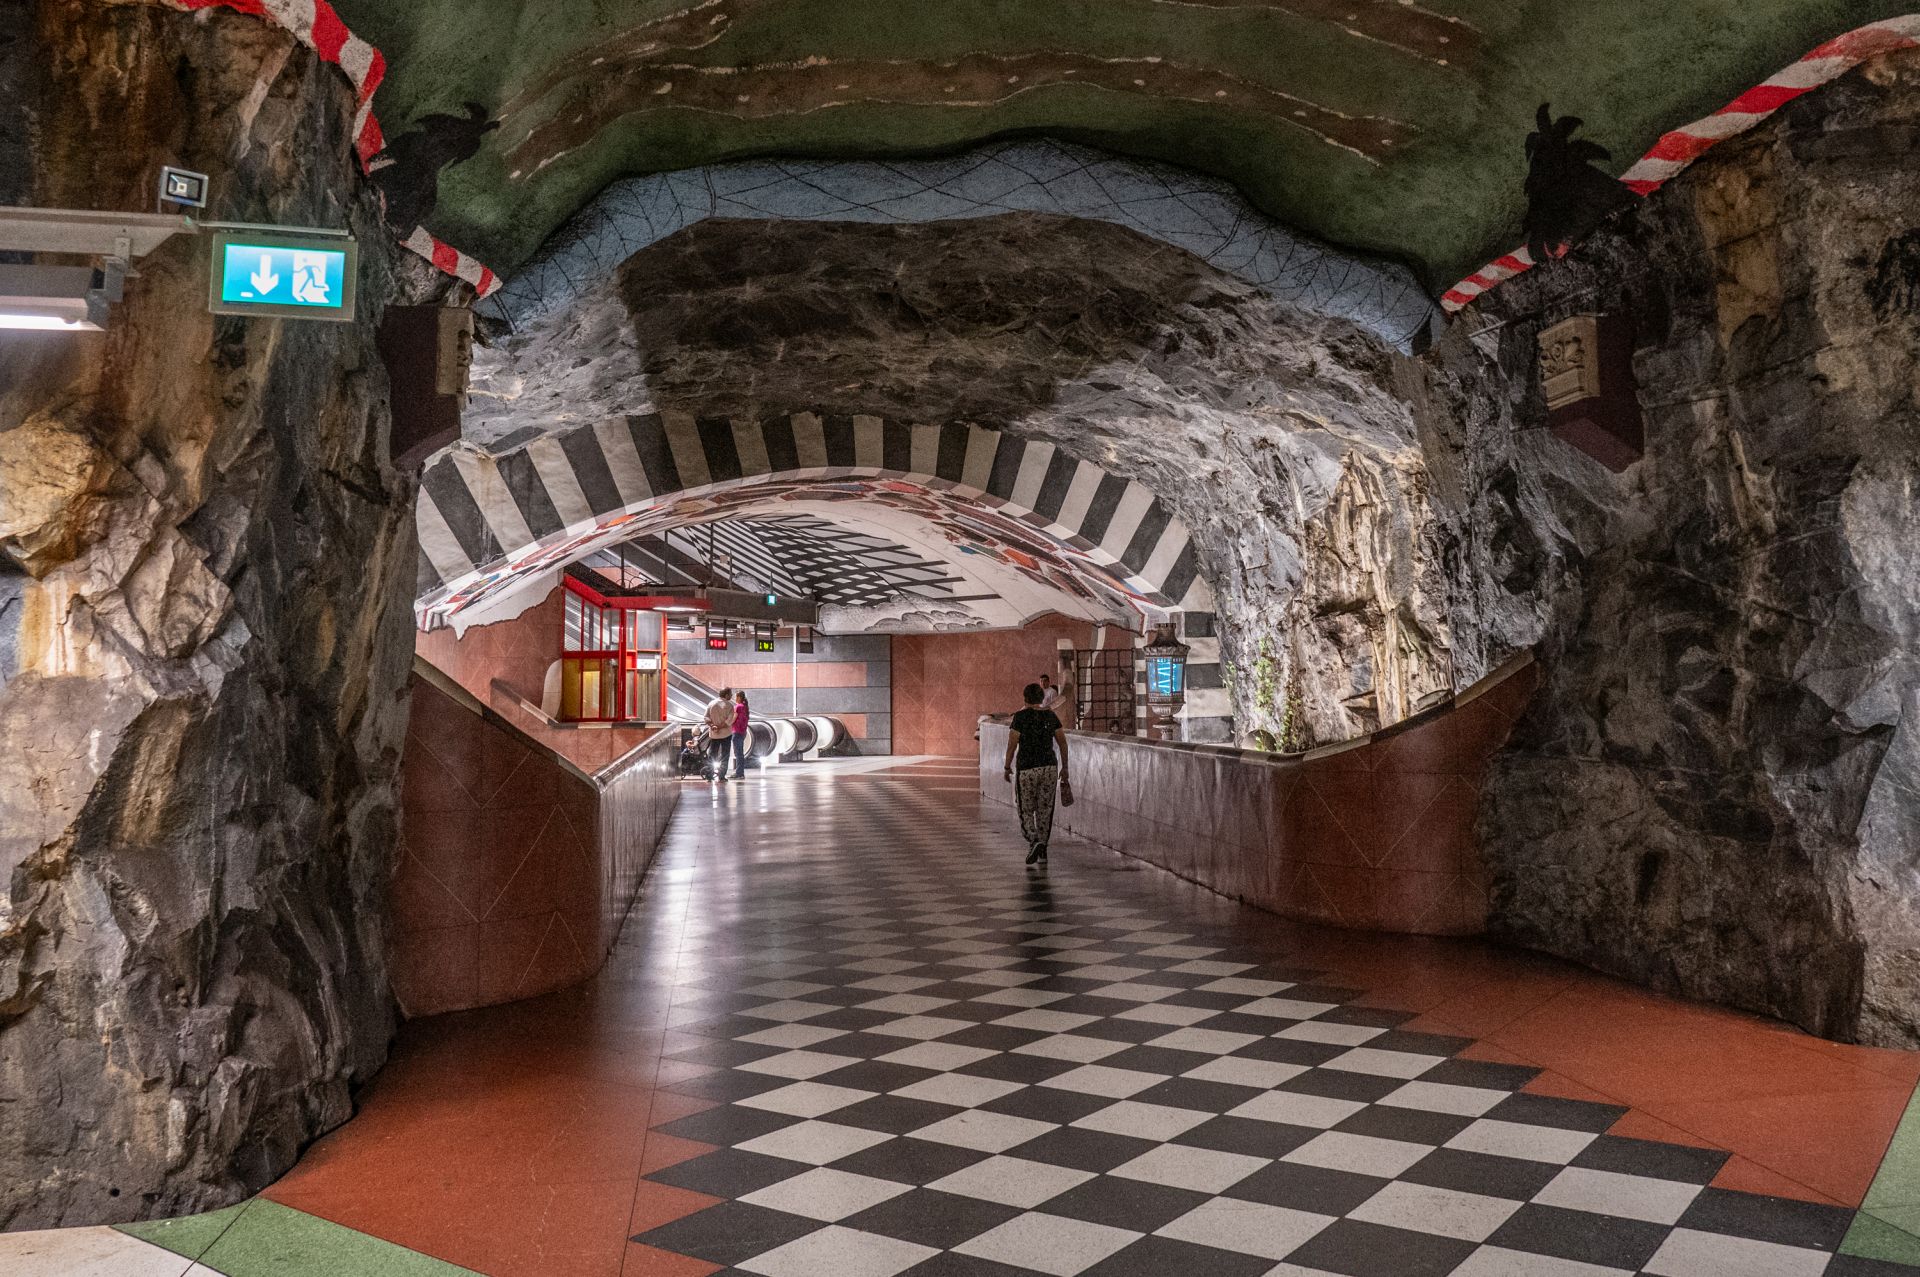 Tunnelbana in Stockholm